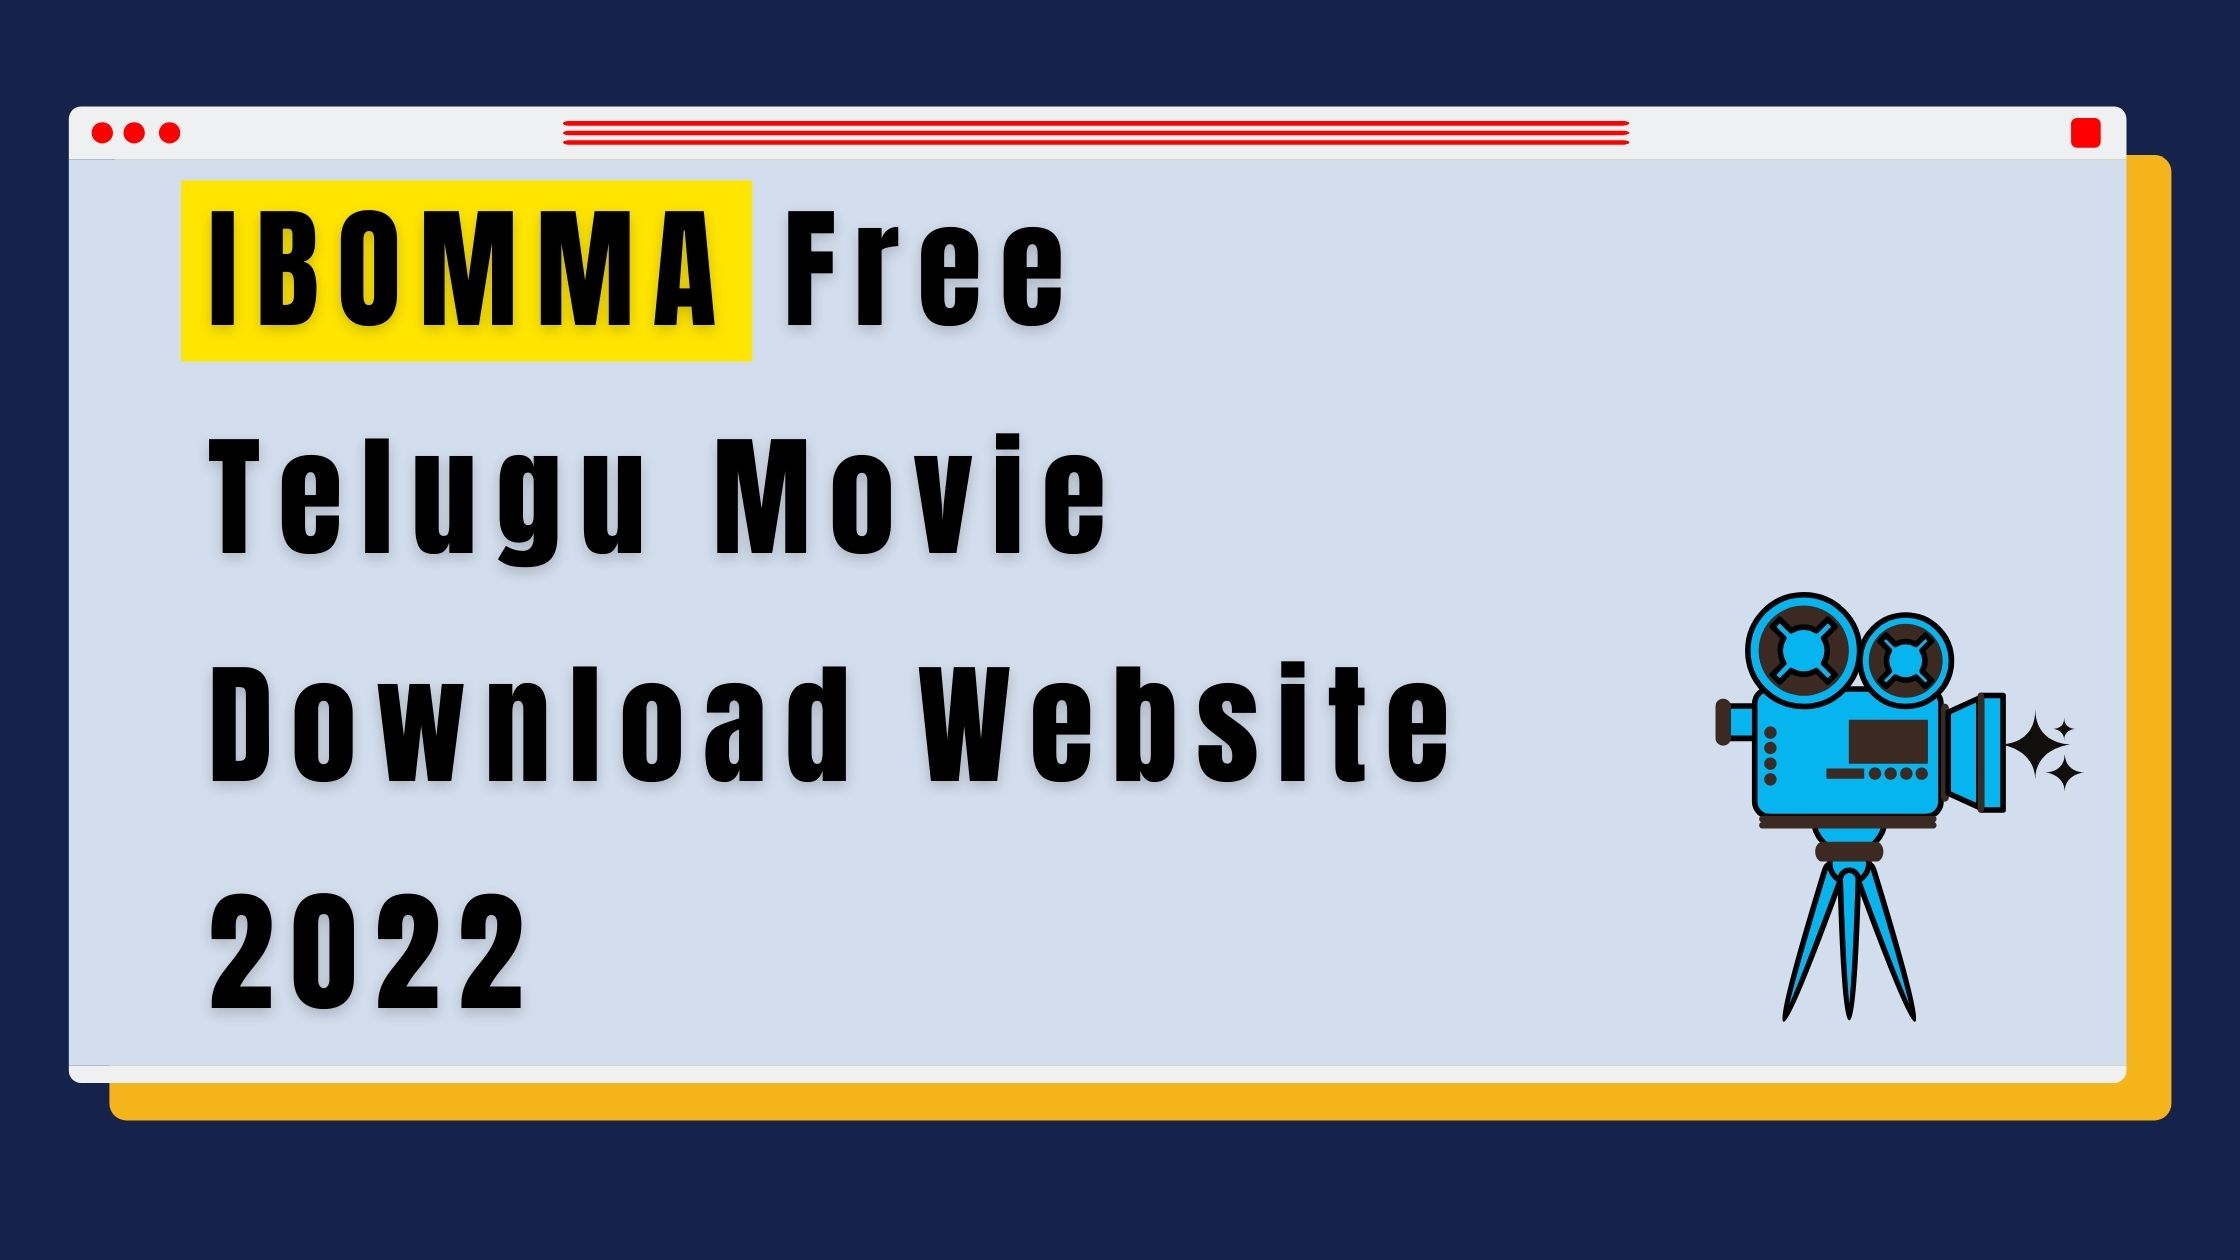 IBOMMA Free Telugu Movie Download Website 2022 Post Pear